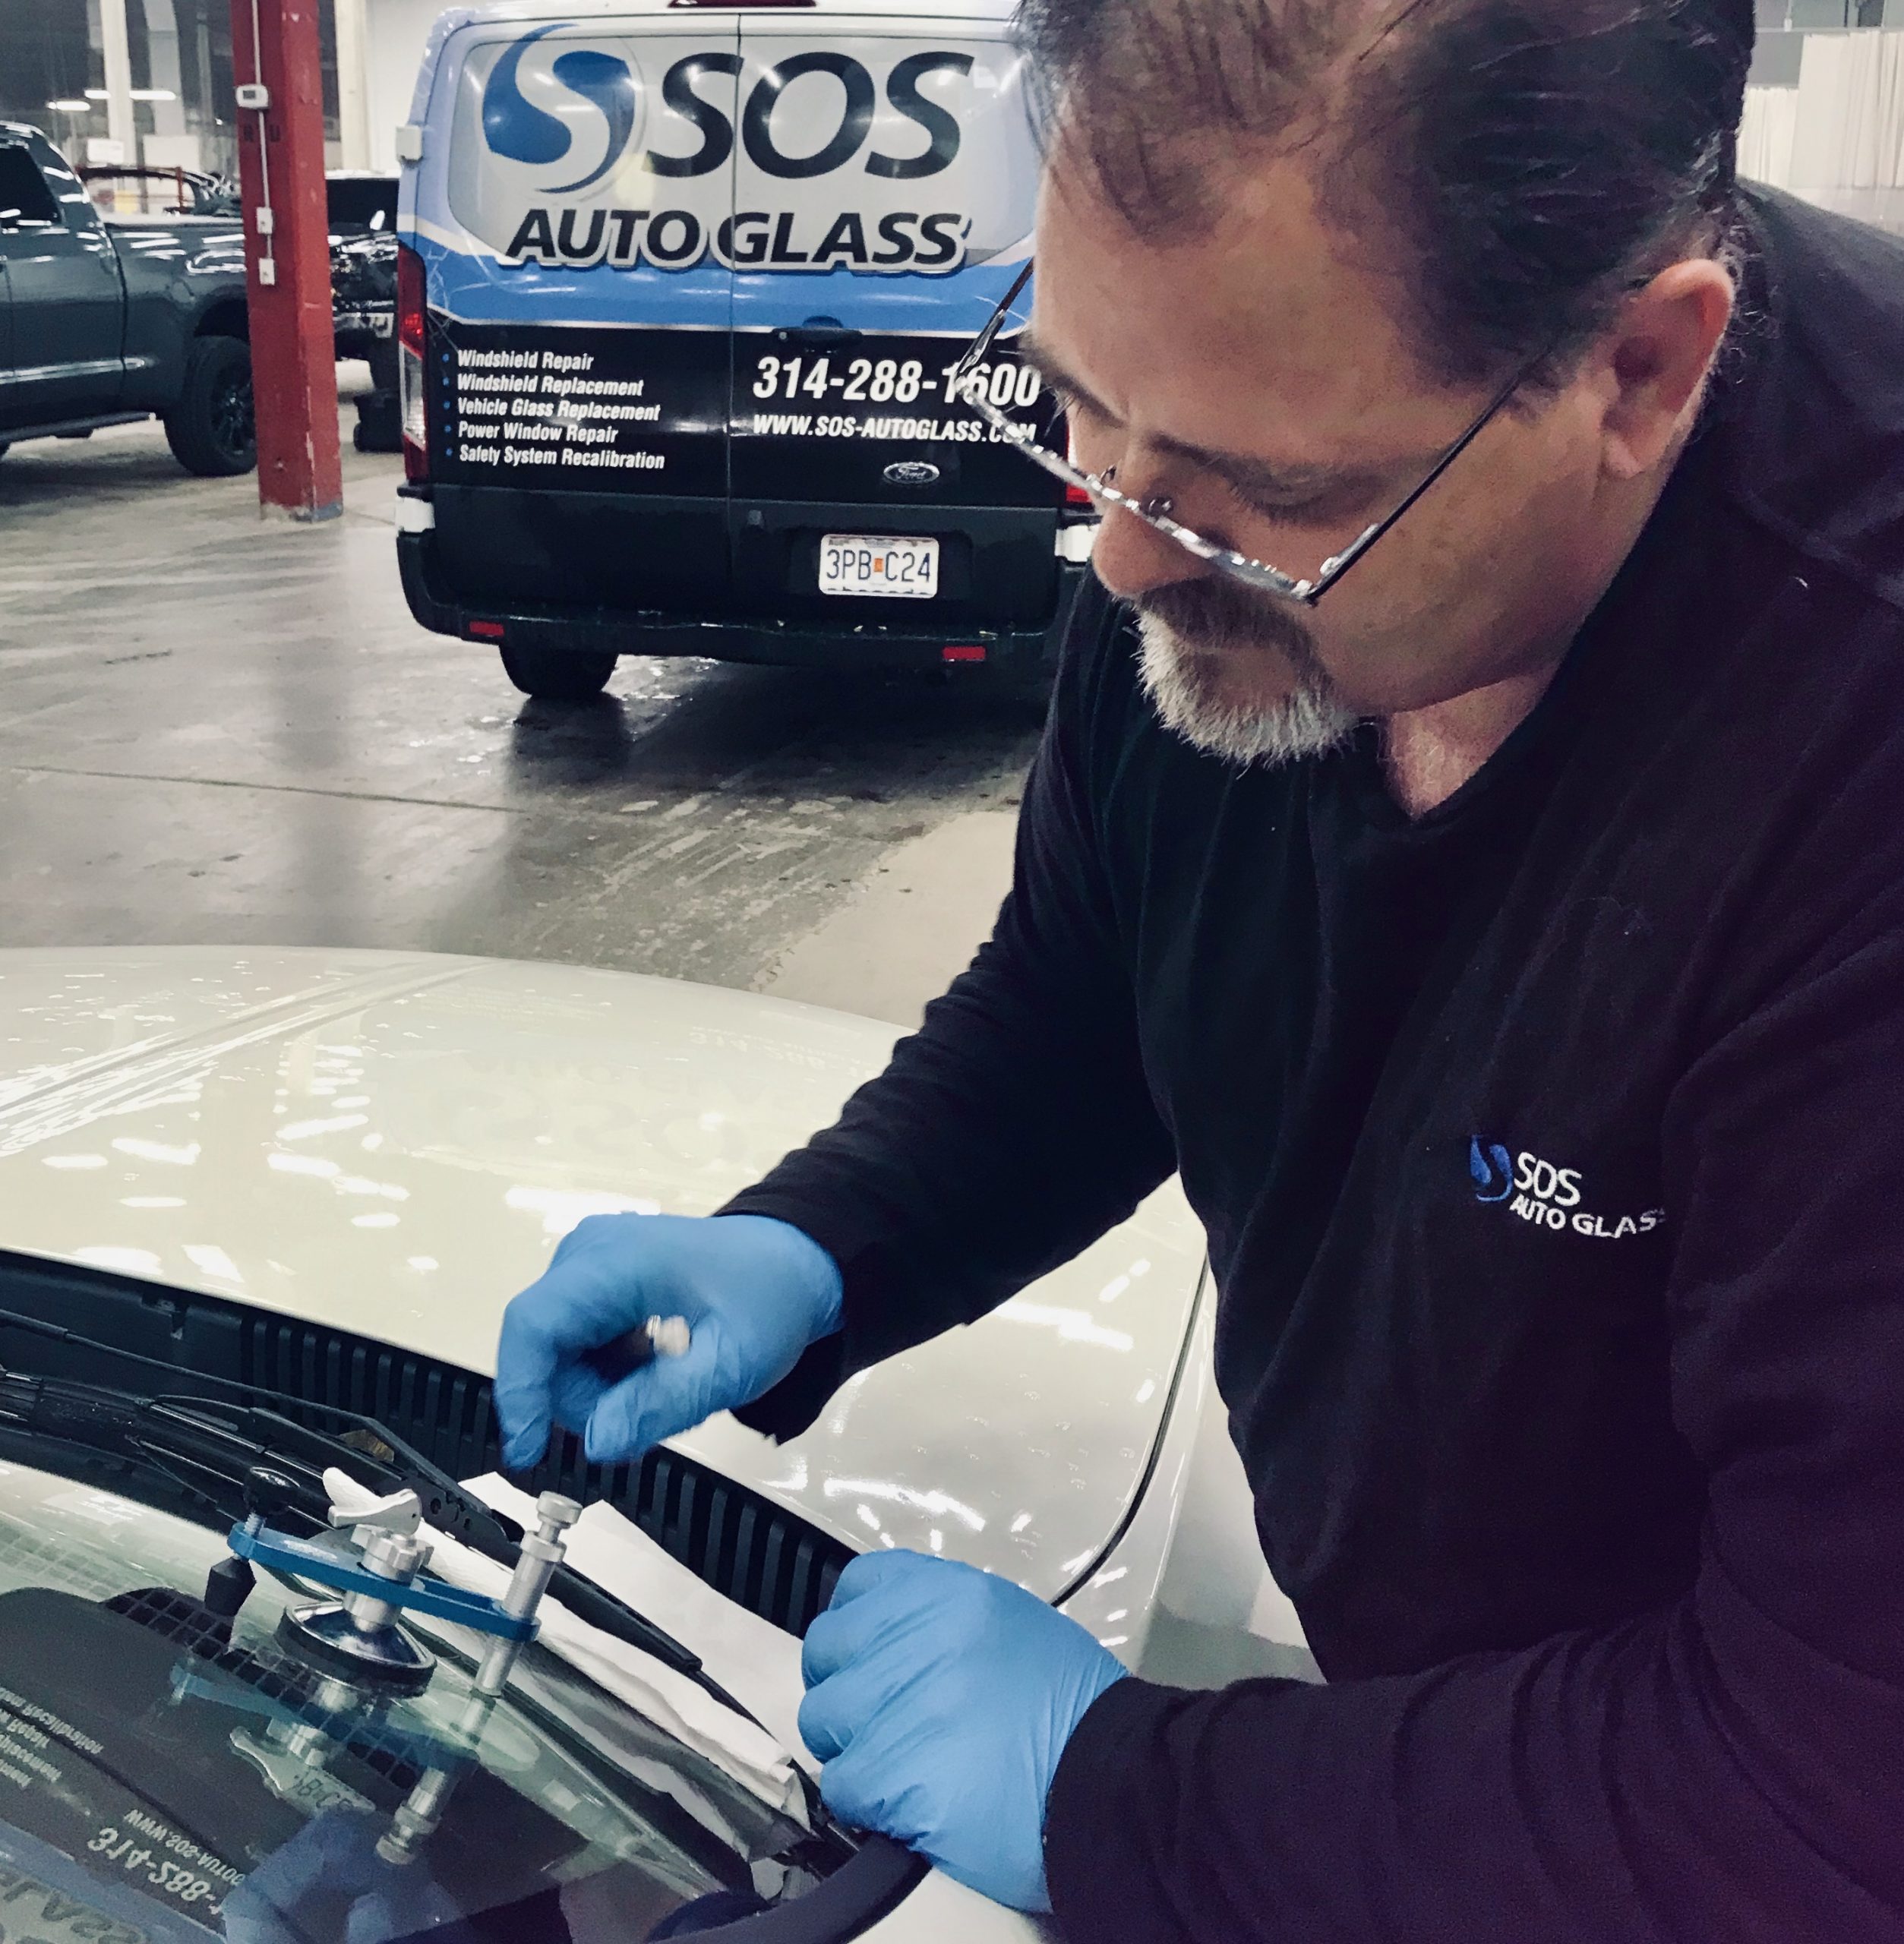 SOS glass technician providing services